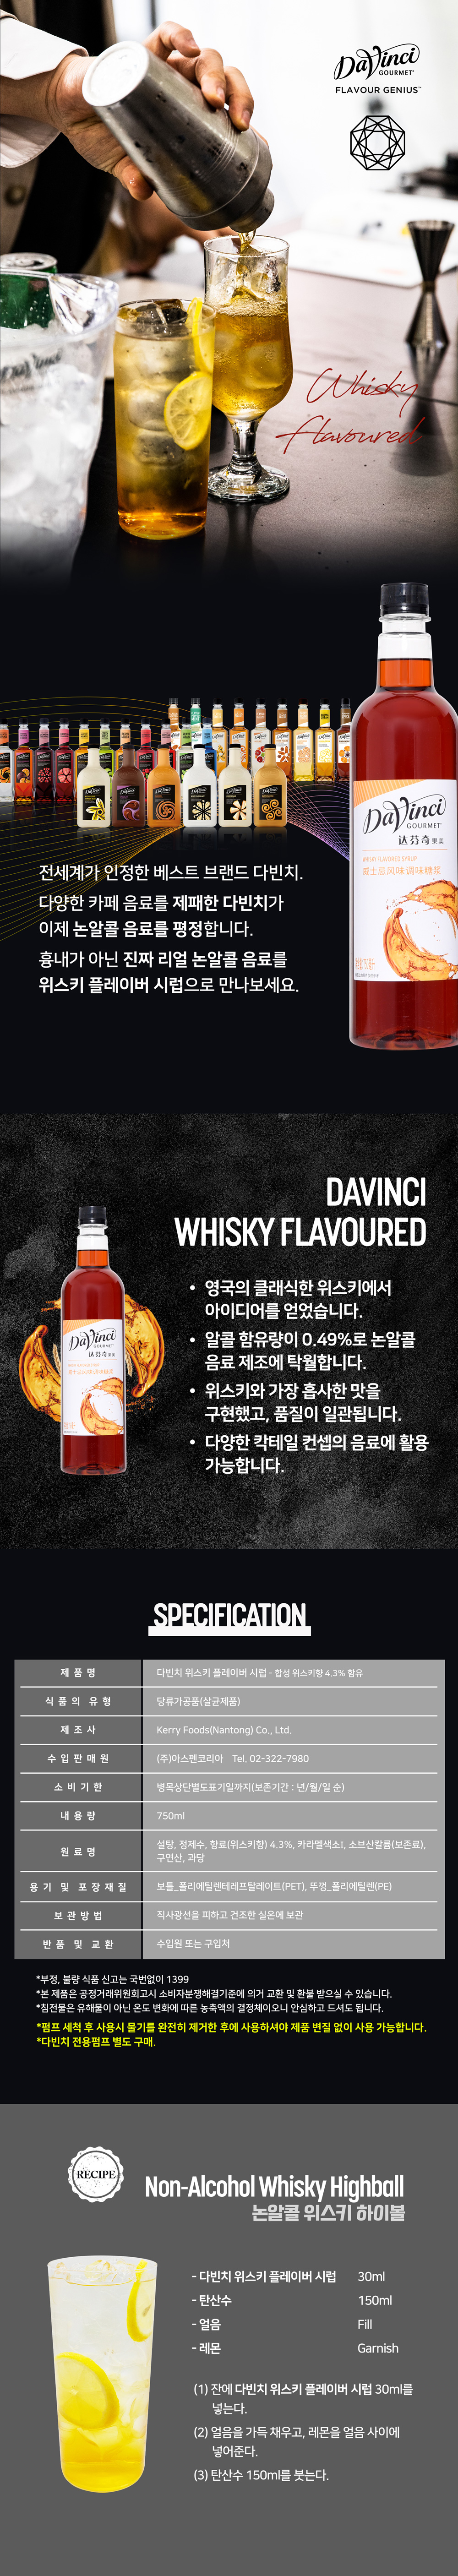 Davinci_Whisky_Syrup